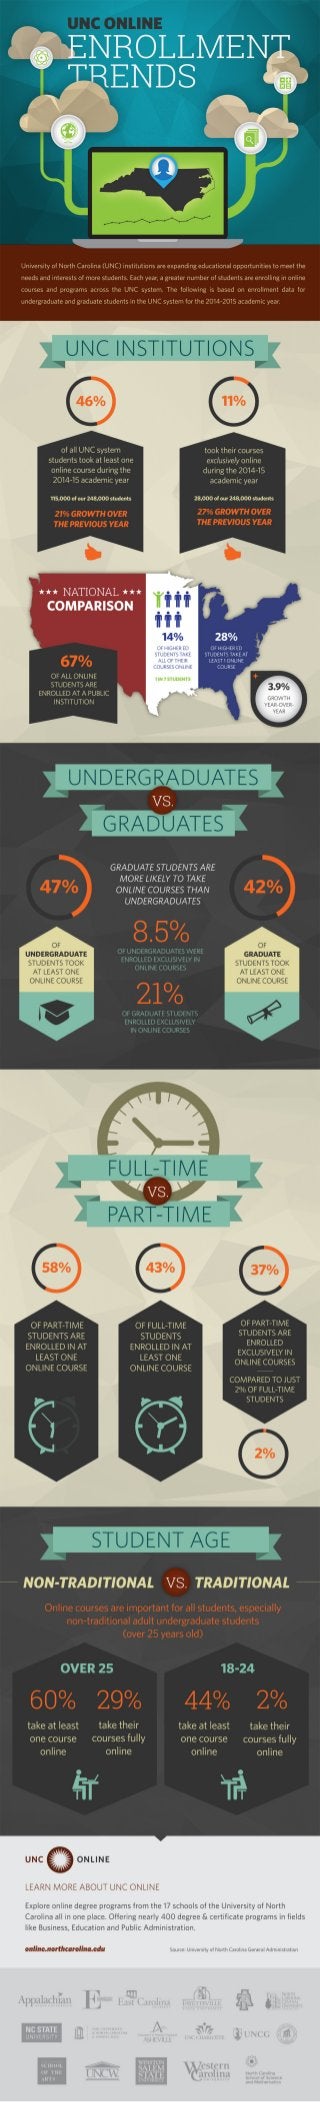 University of North Carolina Online Enrollments Infographic